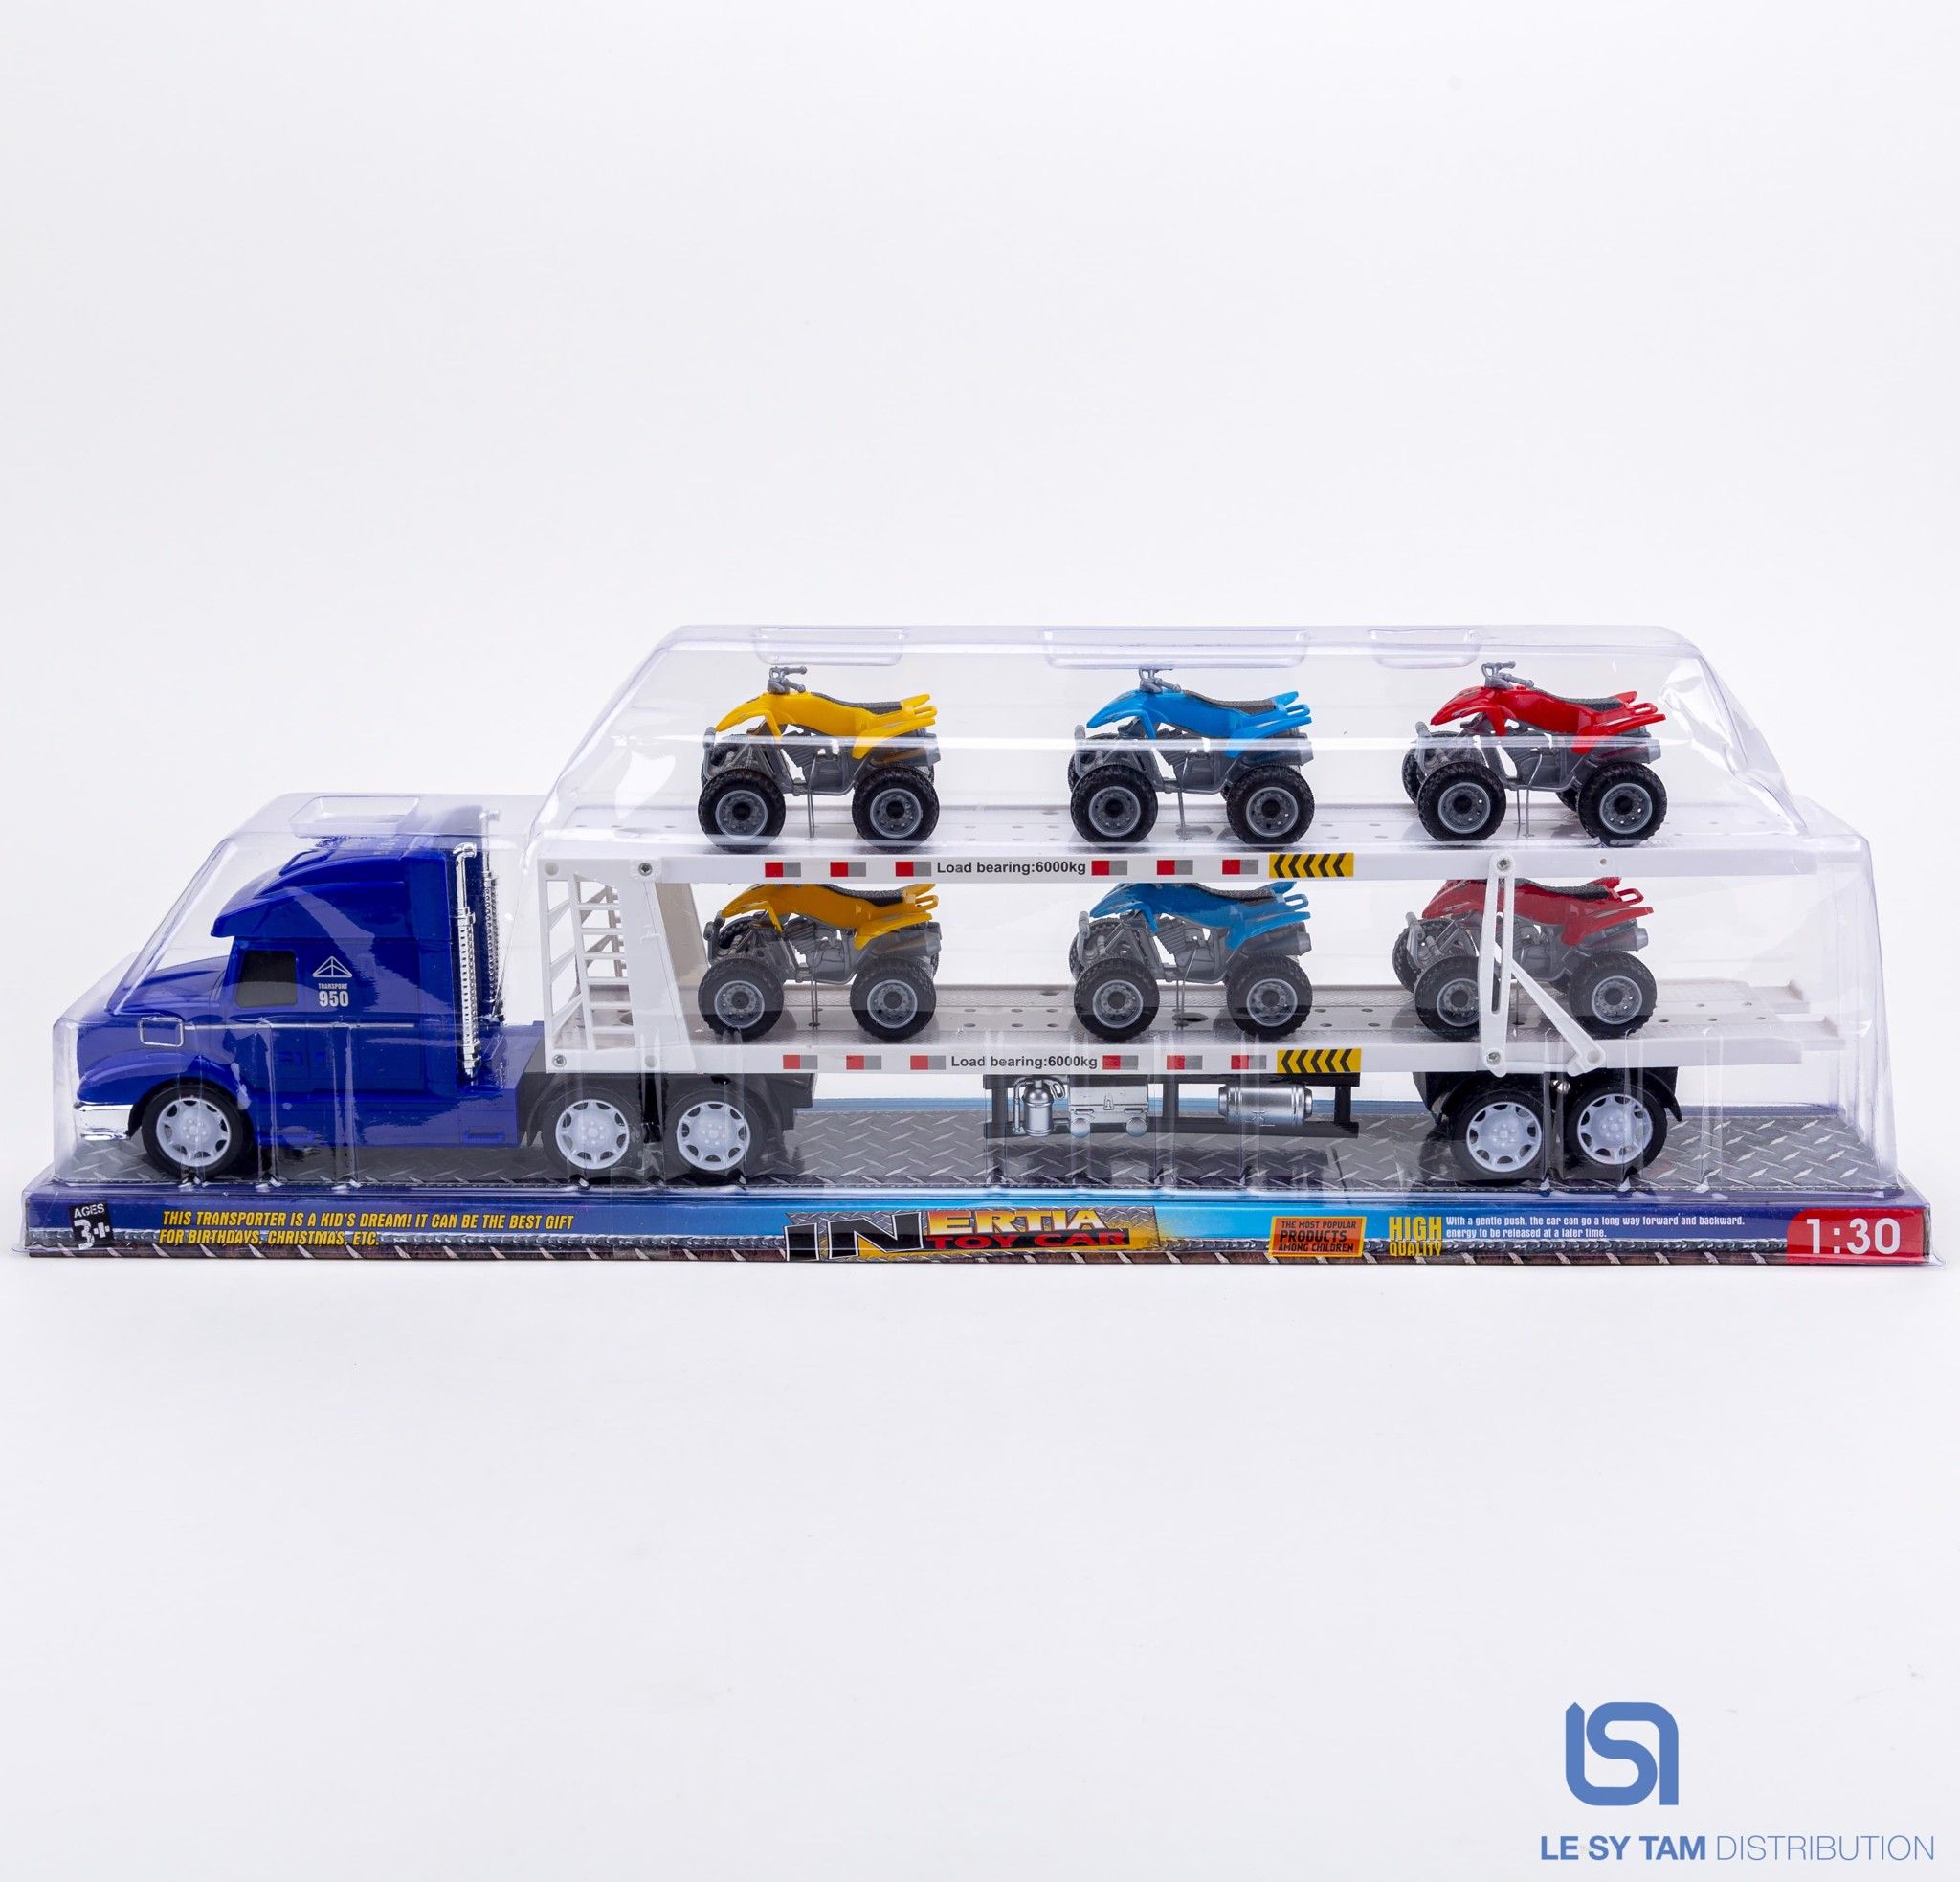  Xe container chở 6 xe đua 950-620 